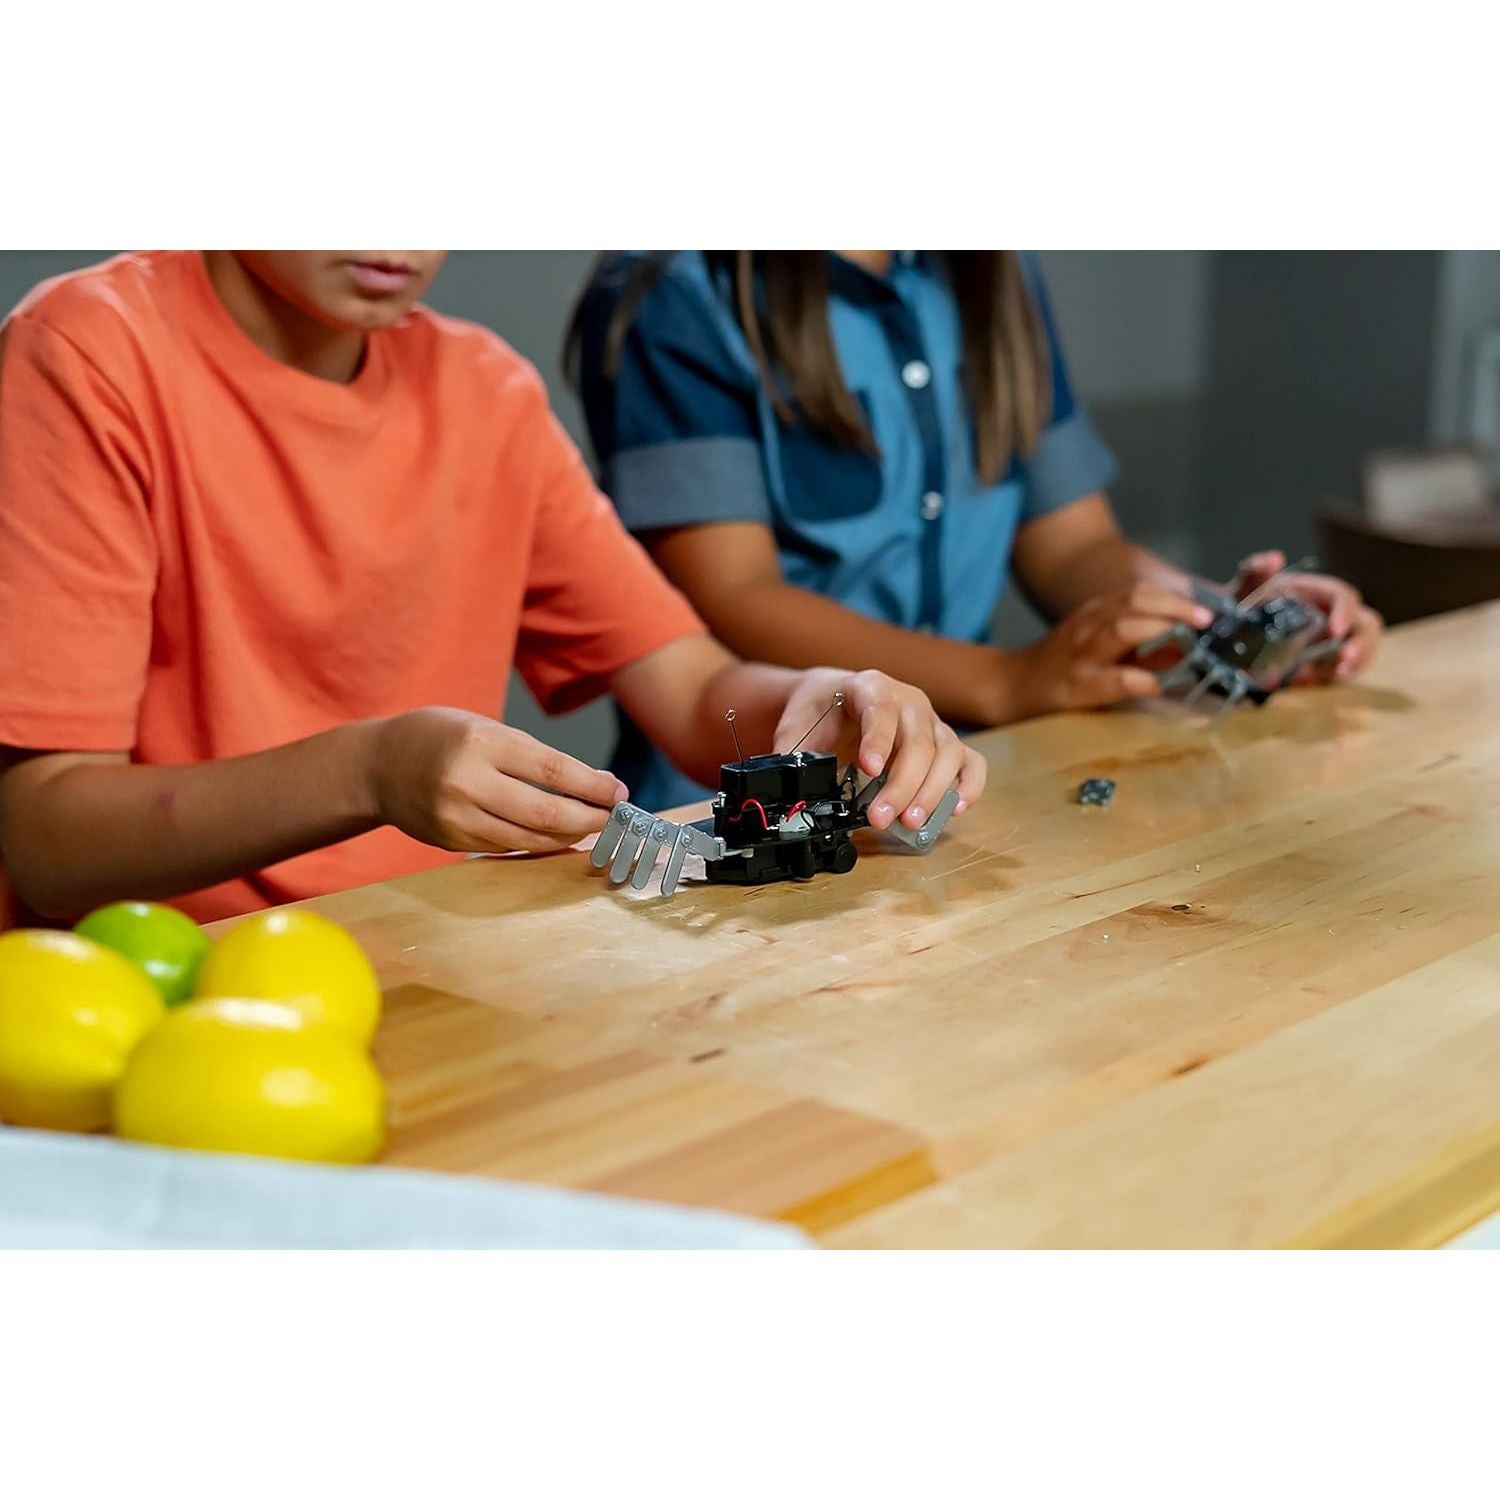 4M- Table Top Robot - DIY Robotics Stem Toys, Engineering Edge Detector Gift